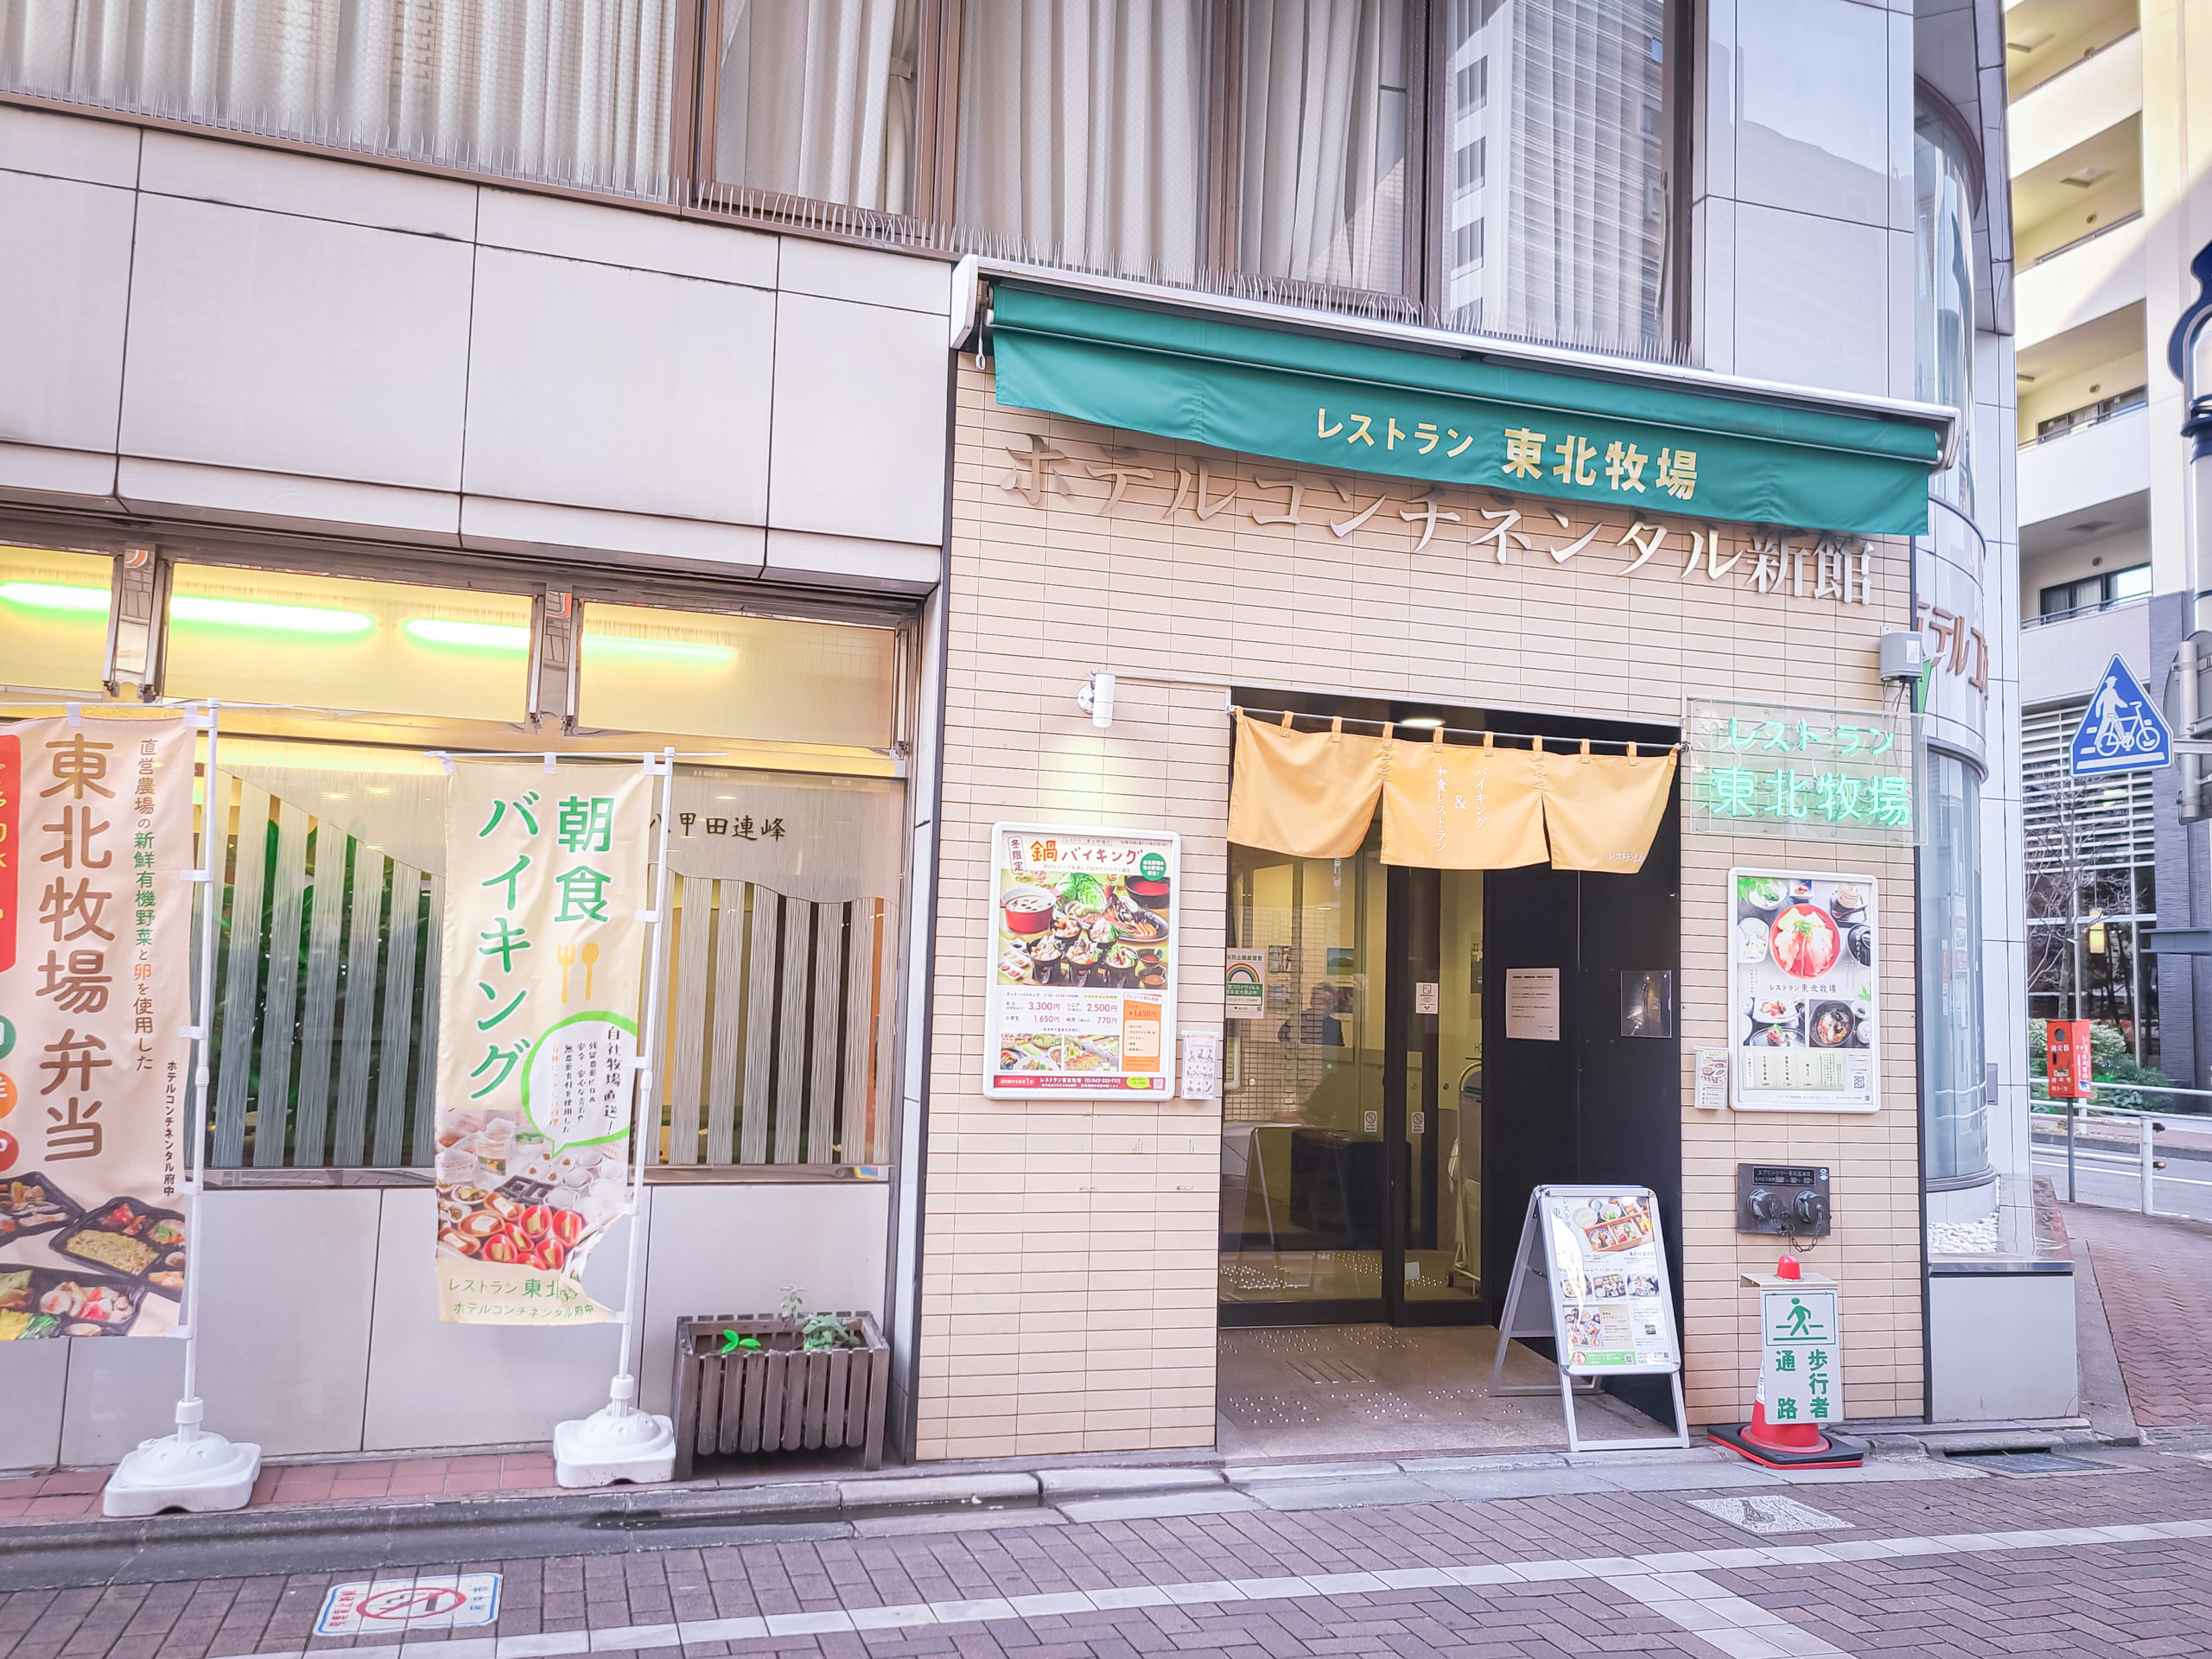 The entrance to Restaurant Tohoku Bokujo 